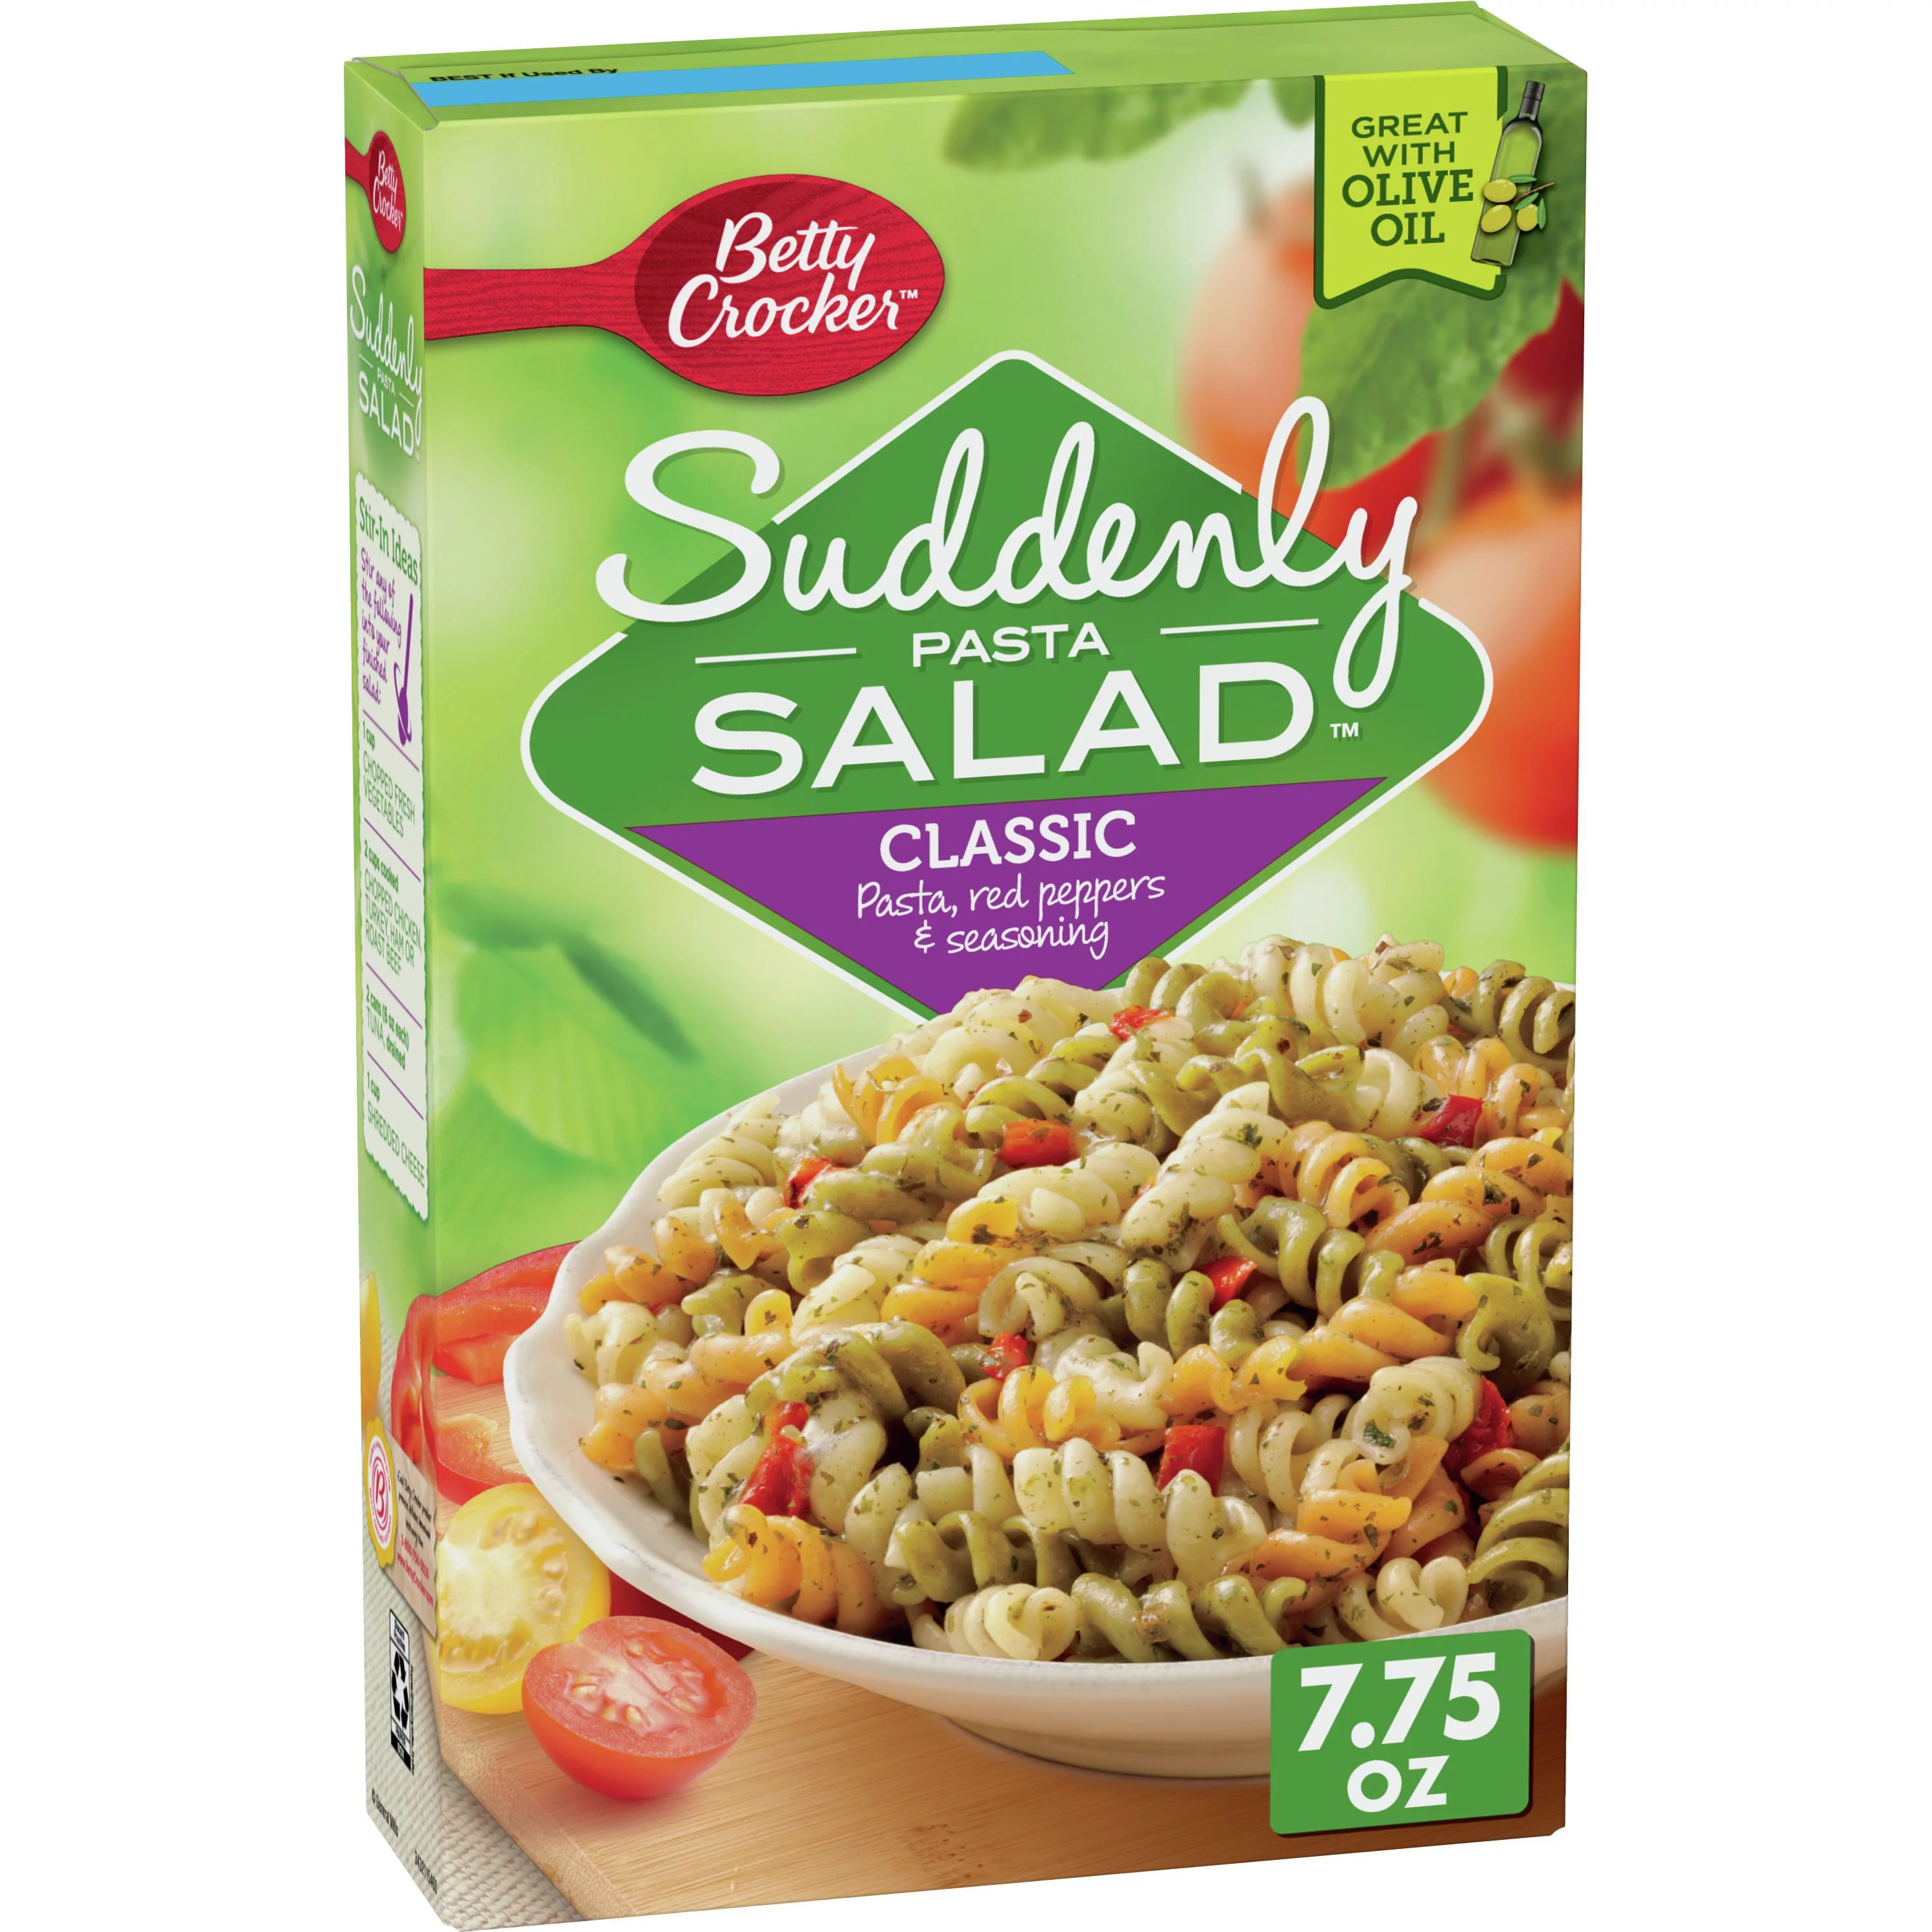 Suddenly Salad Classic Pasta Salad Mix